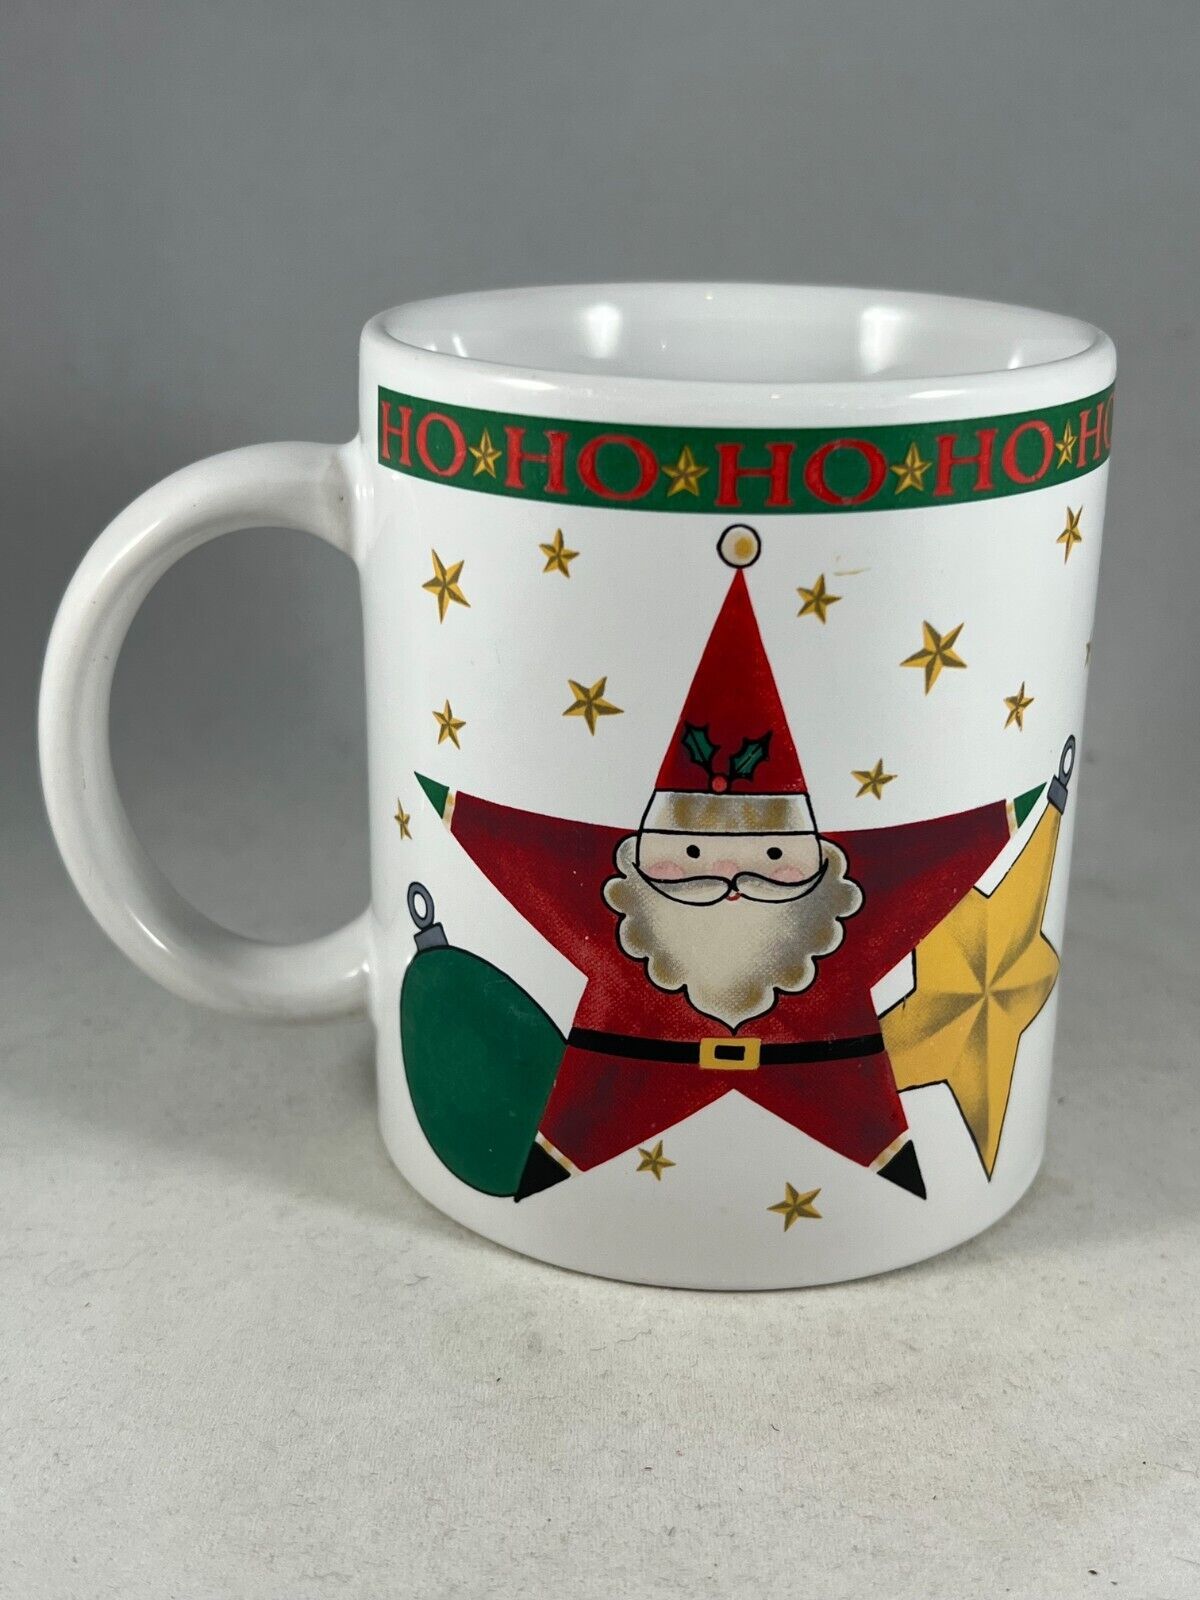 Modern Santa Claus Illustrated Christmas Coffee Mug by Signature Housewares 1994 - $14.25